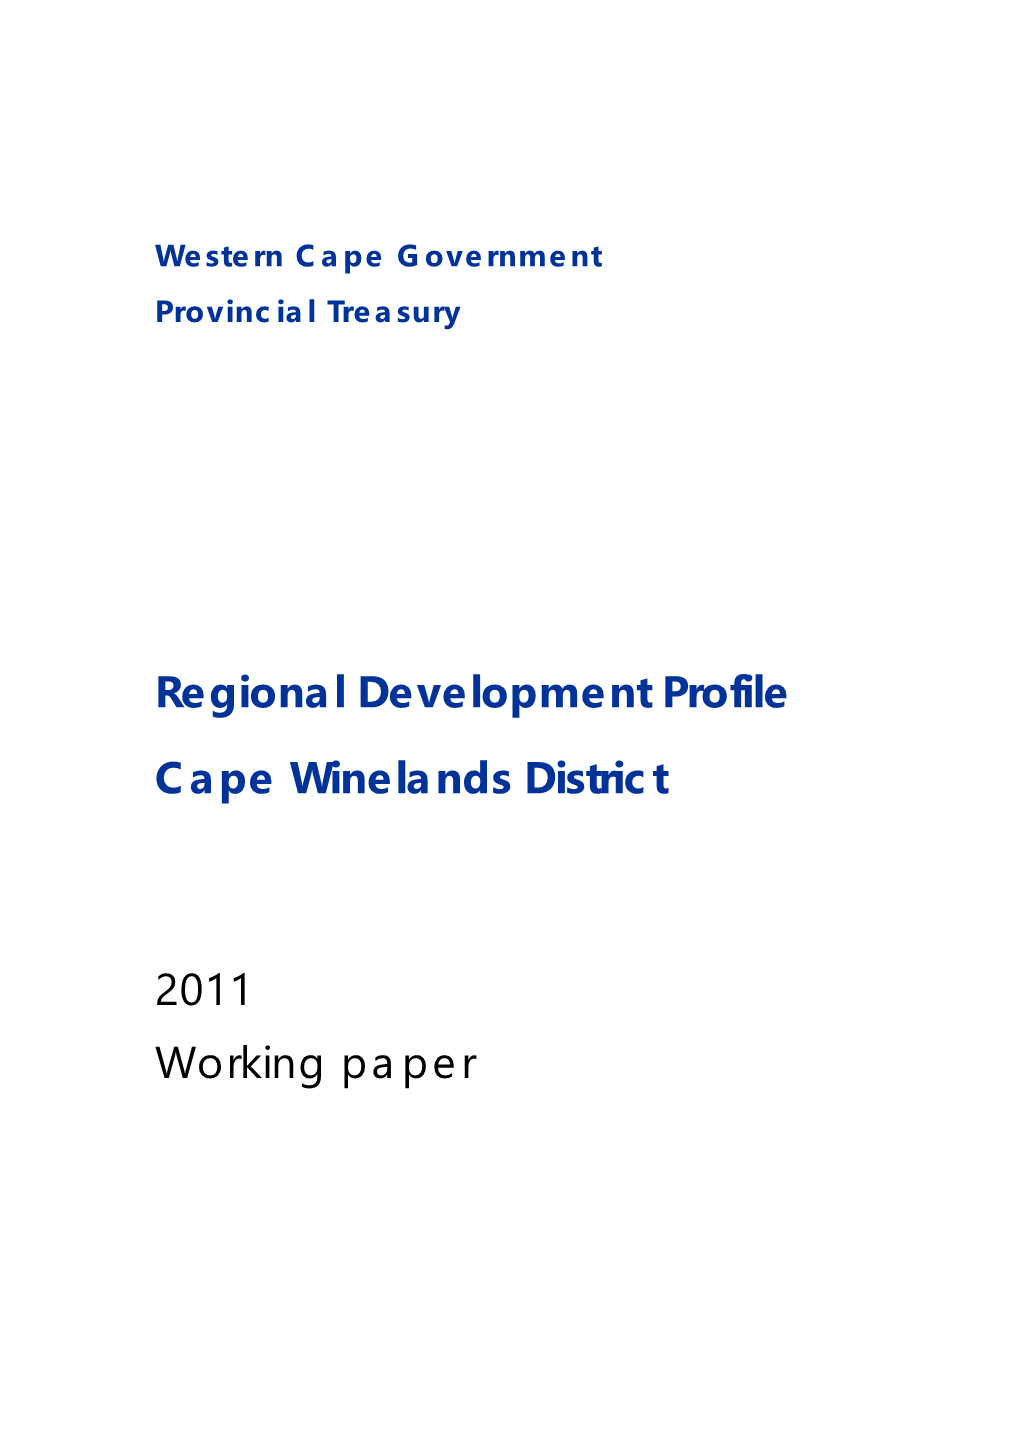 Regional Development Profile Cape Winelands District